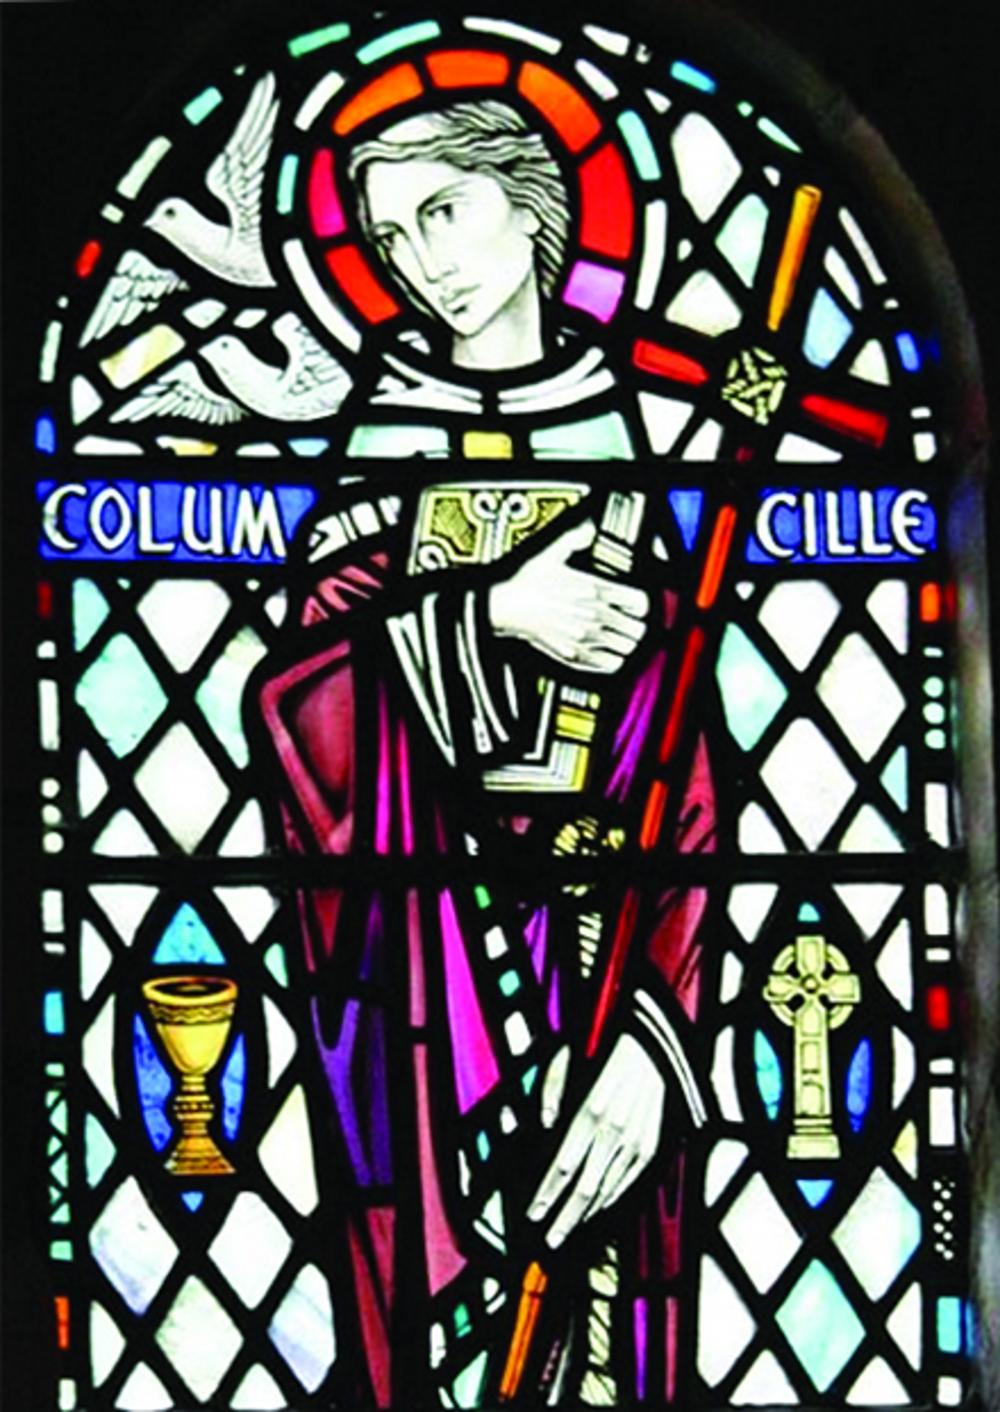 St. Columba (Columcille)